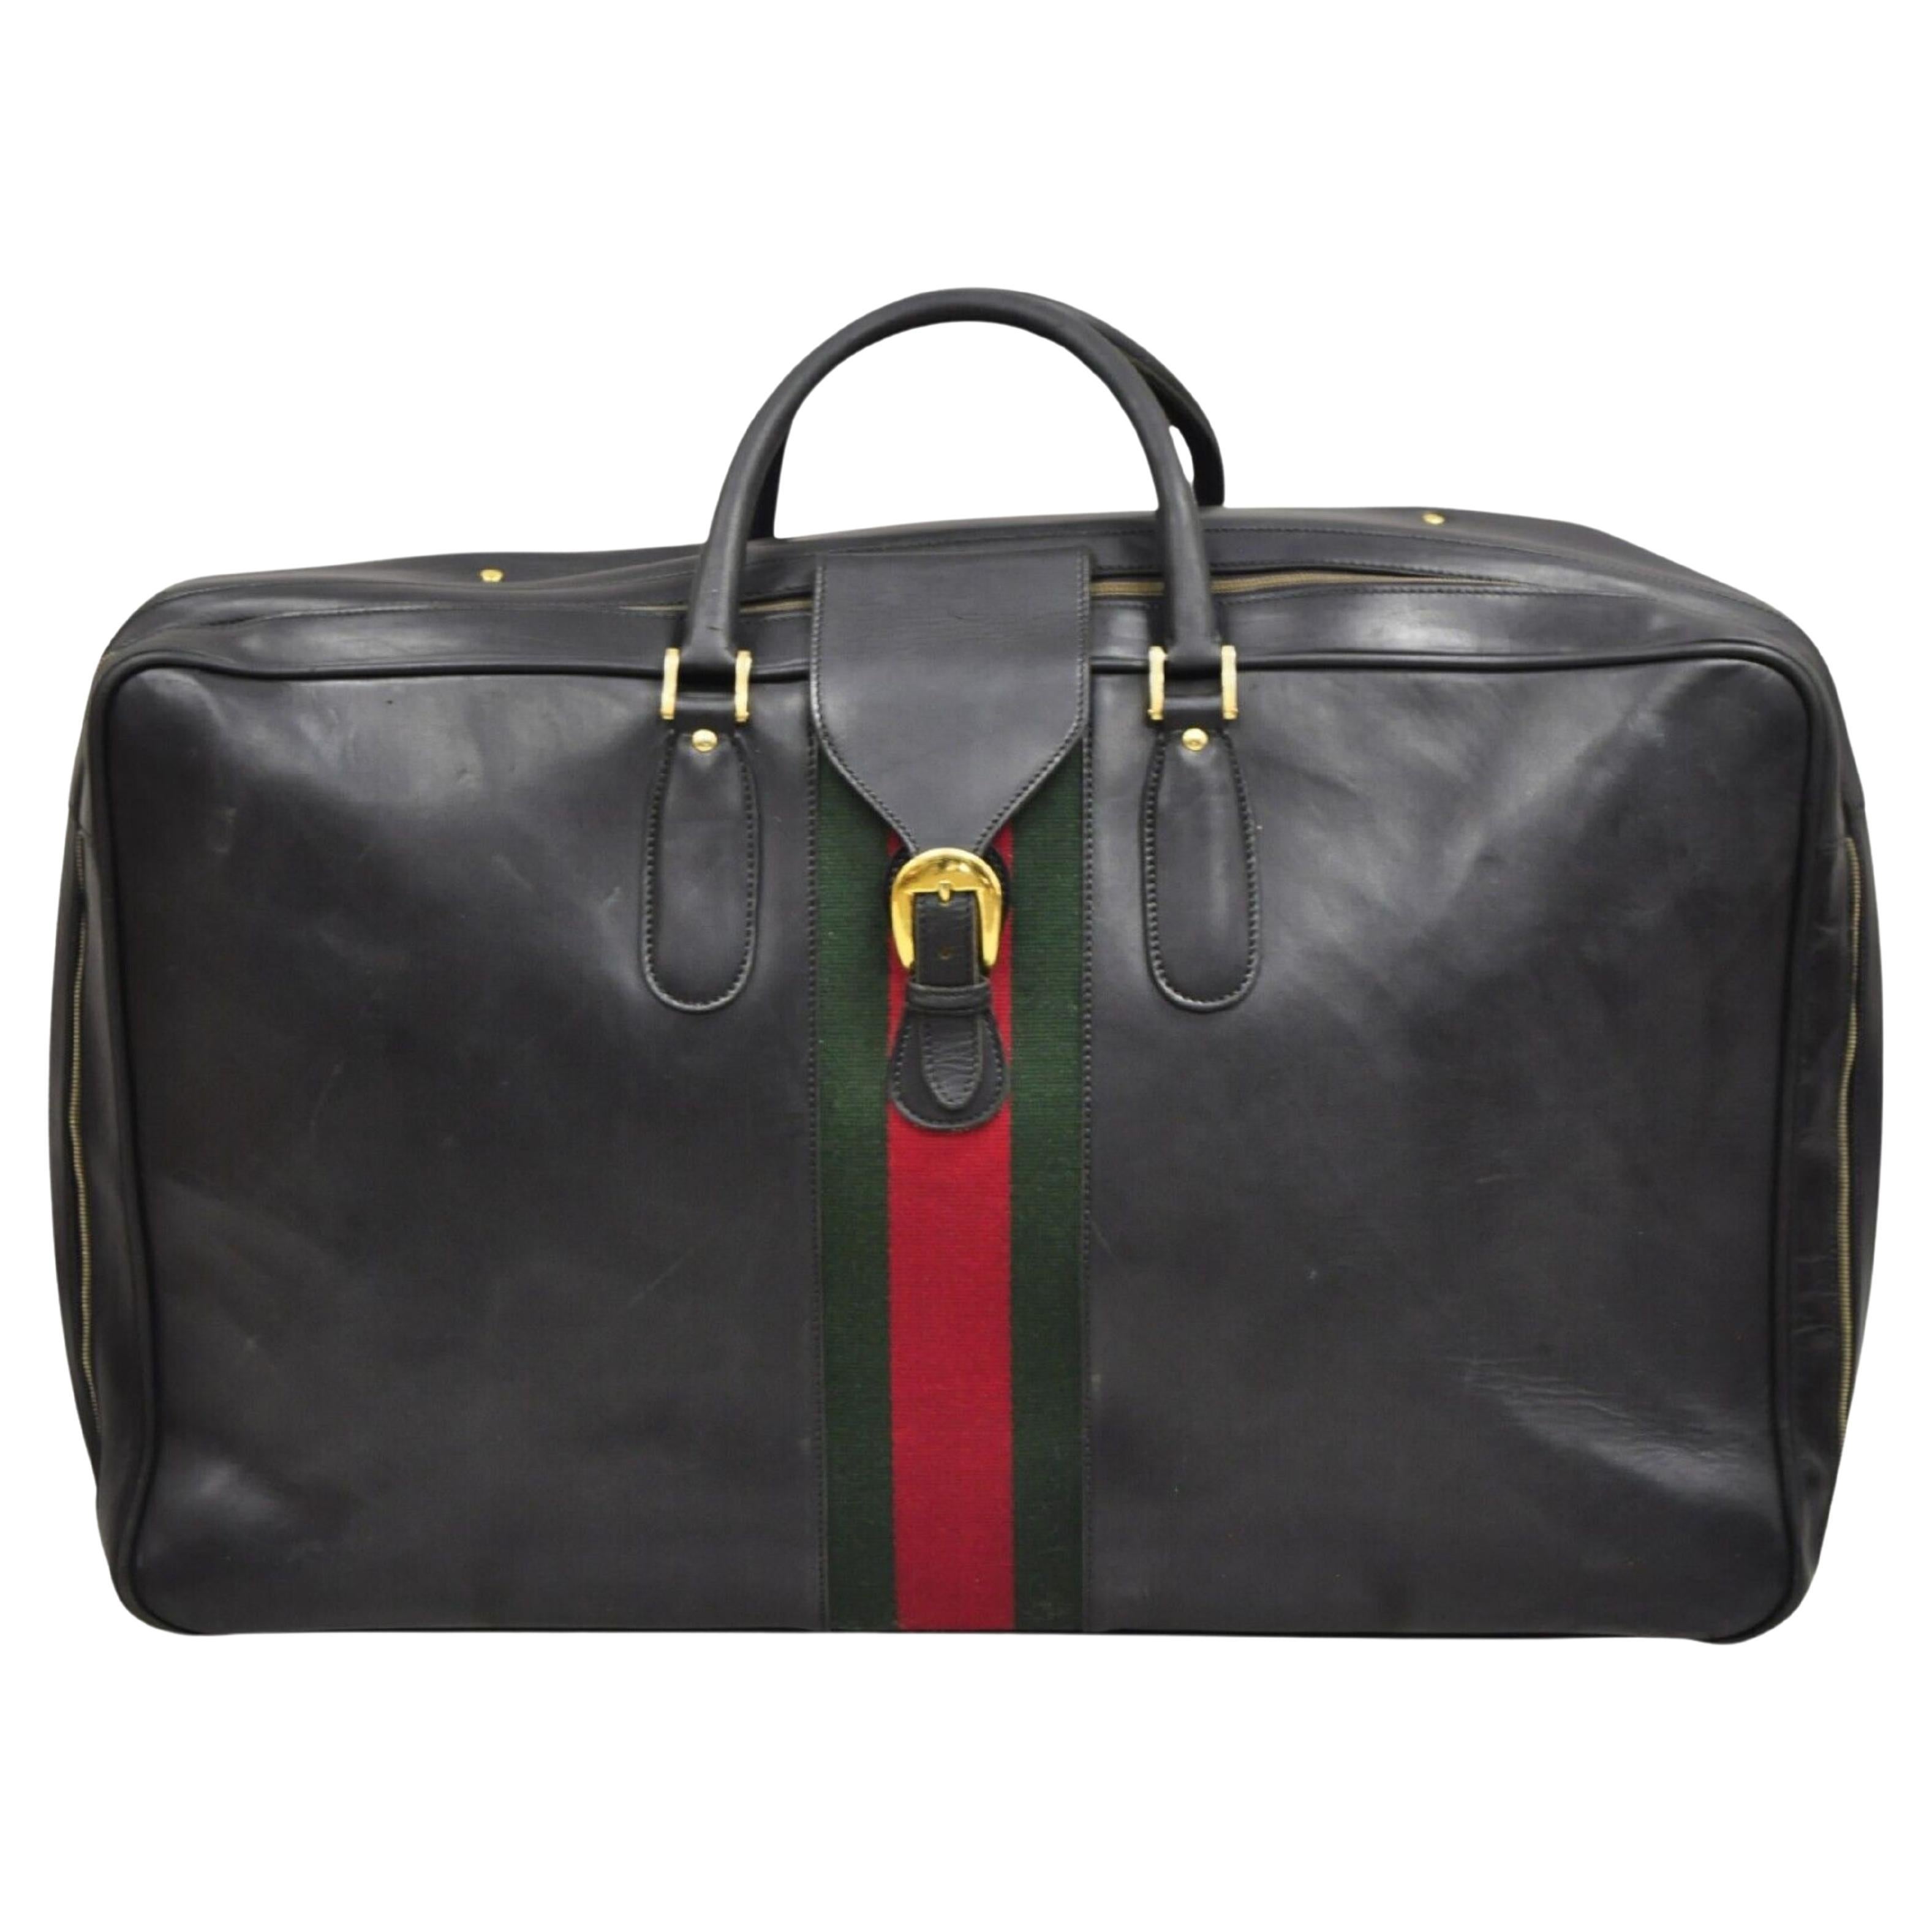 Vintage Gucci Large Black Leather Suitcase Luggage Travel Bag Green Red Webbing